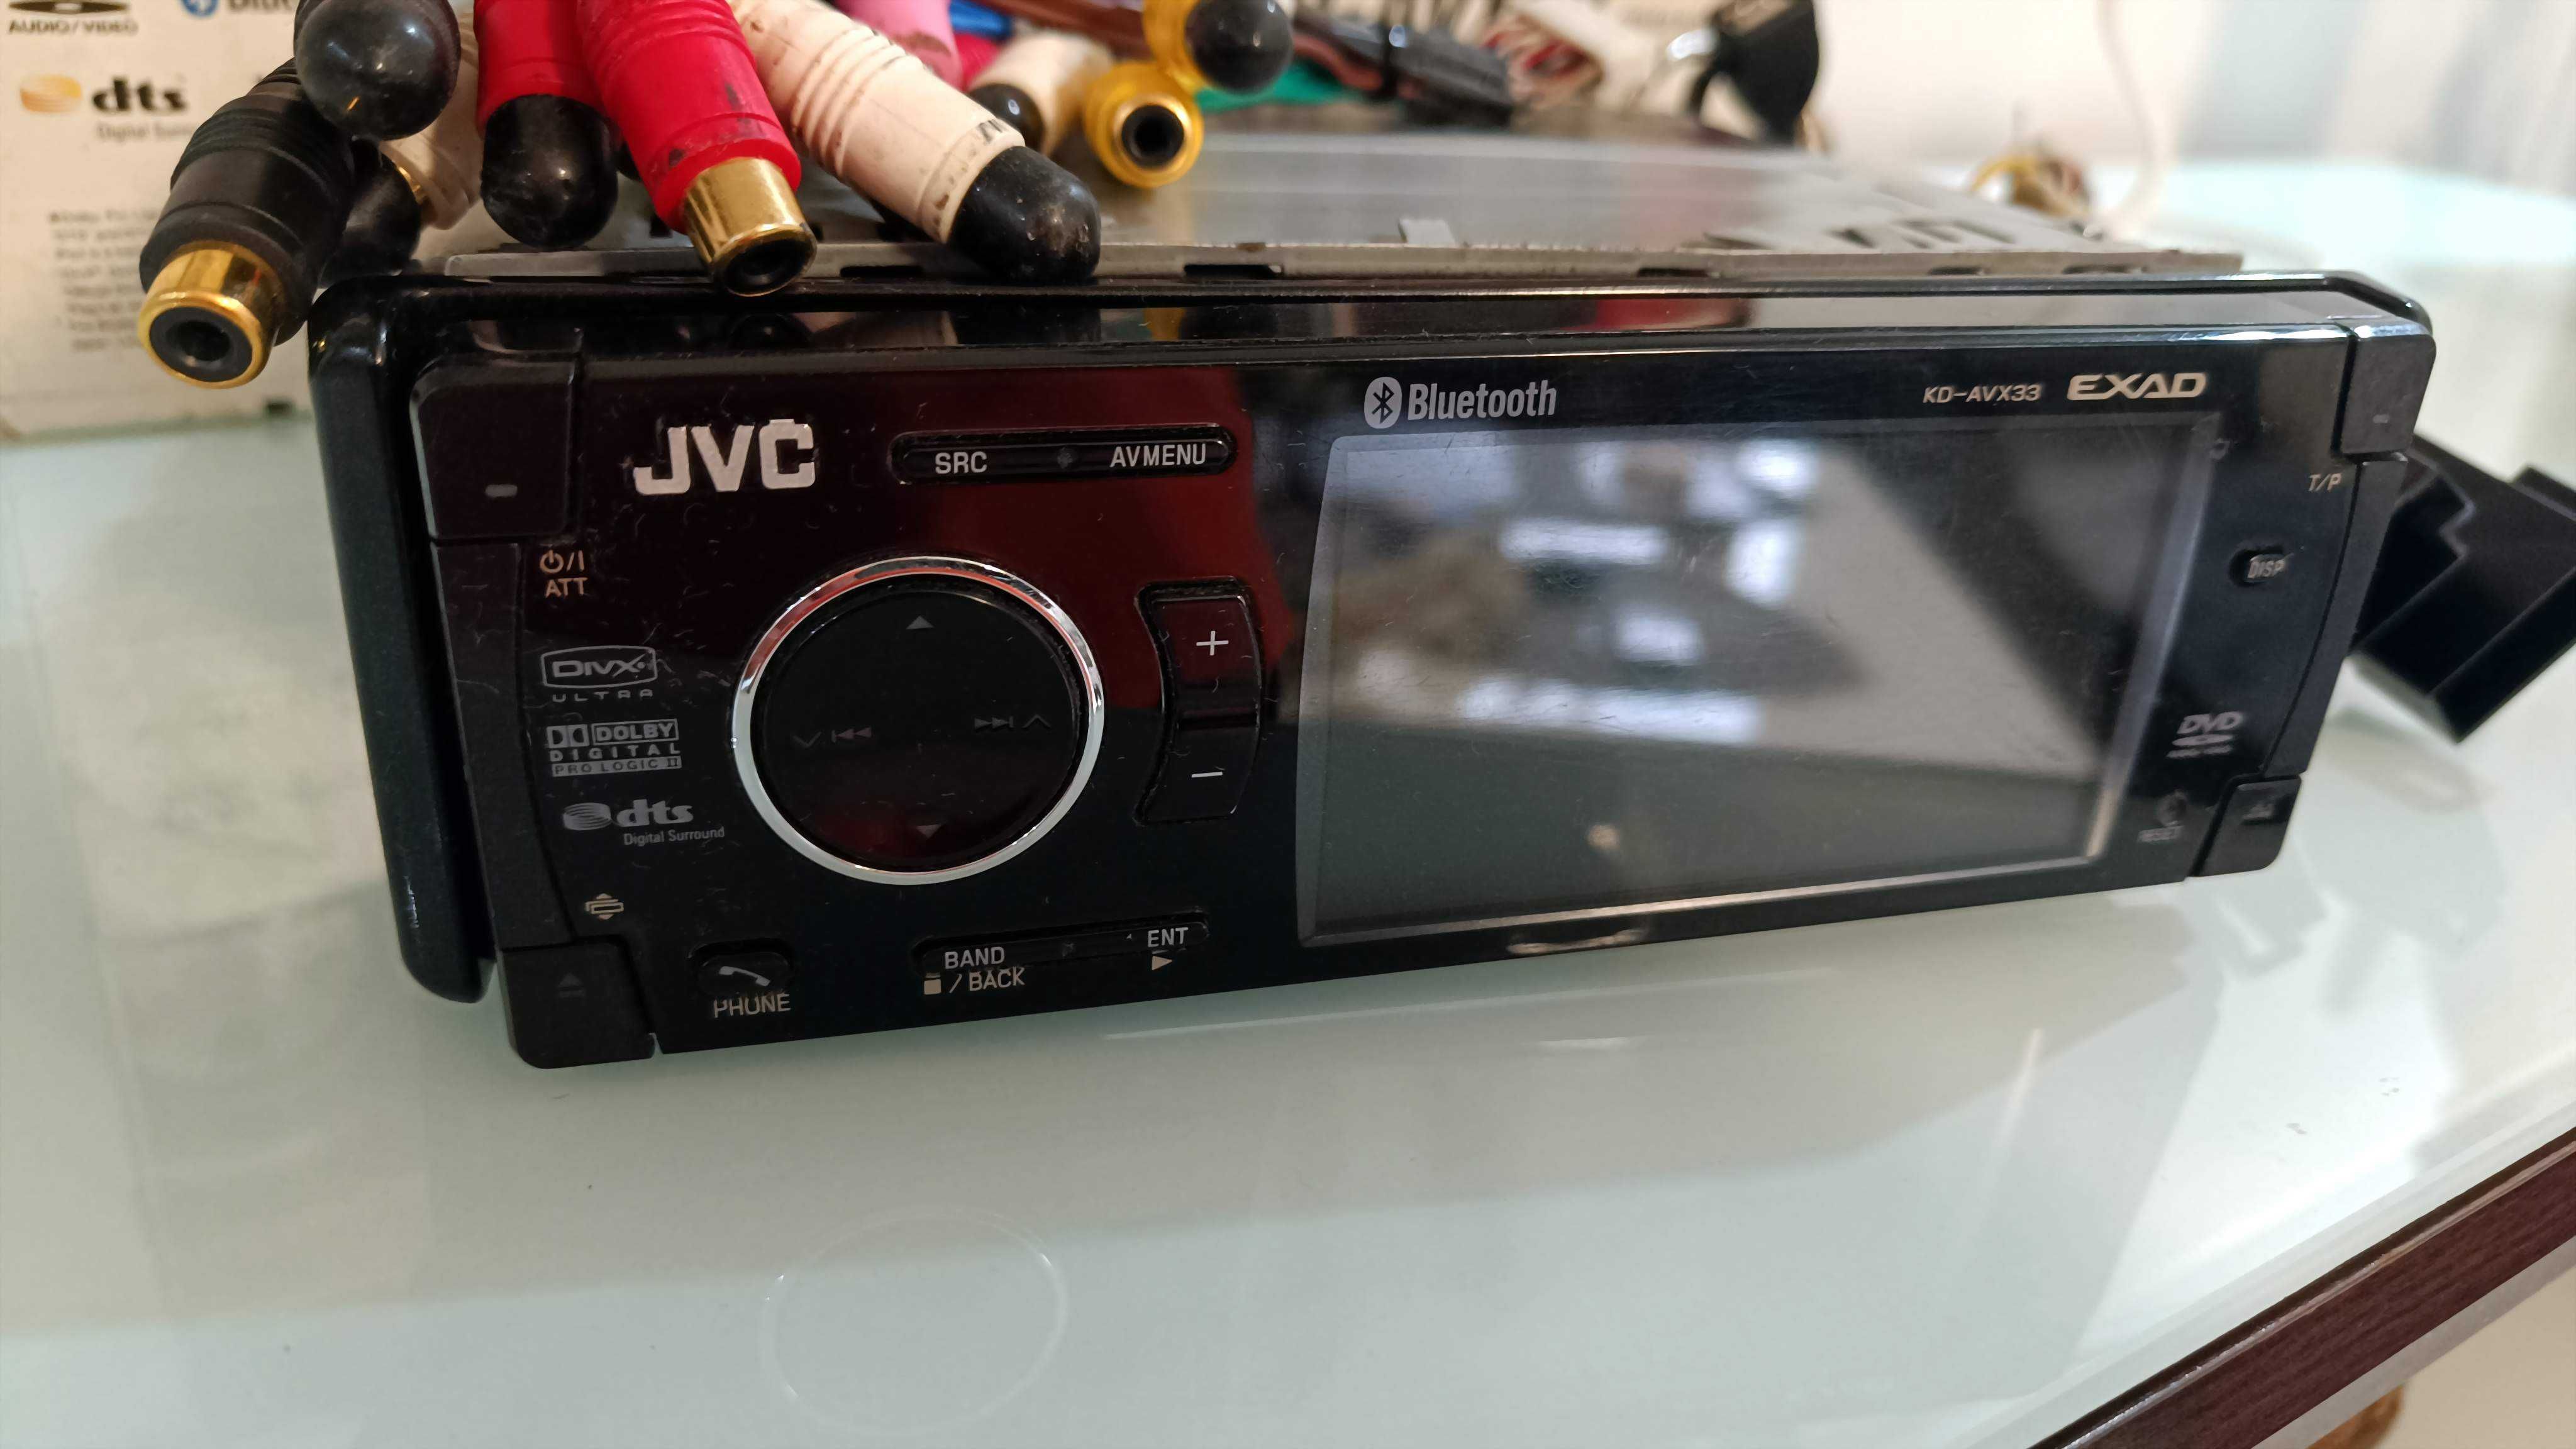 Radio DVD USB 5,1 dts -JVC